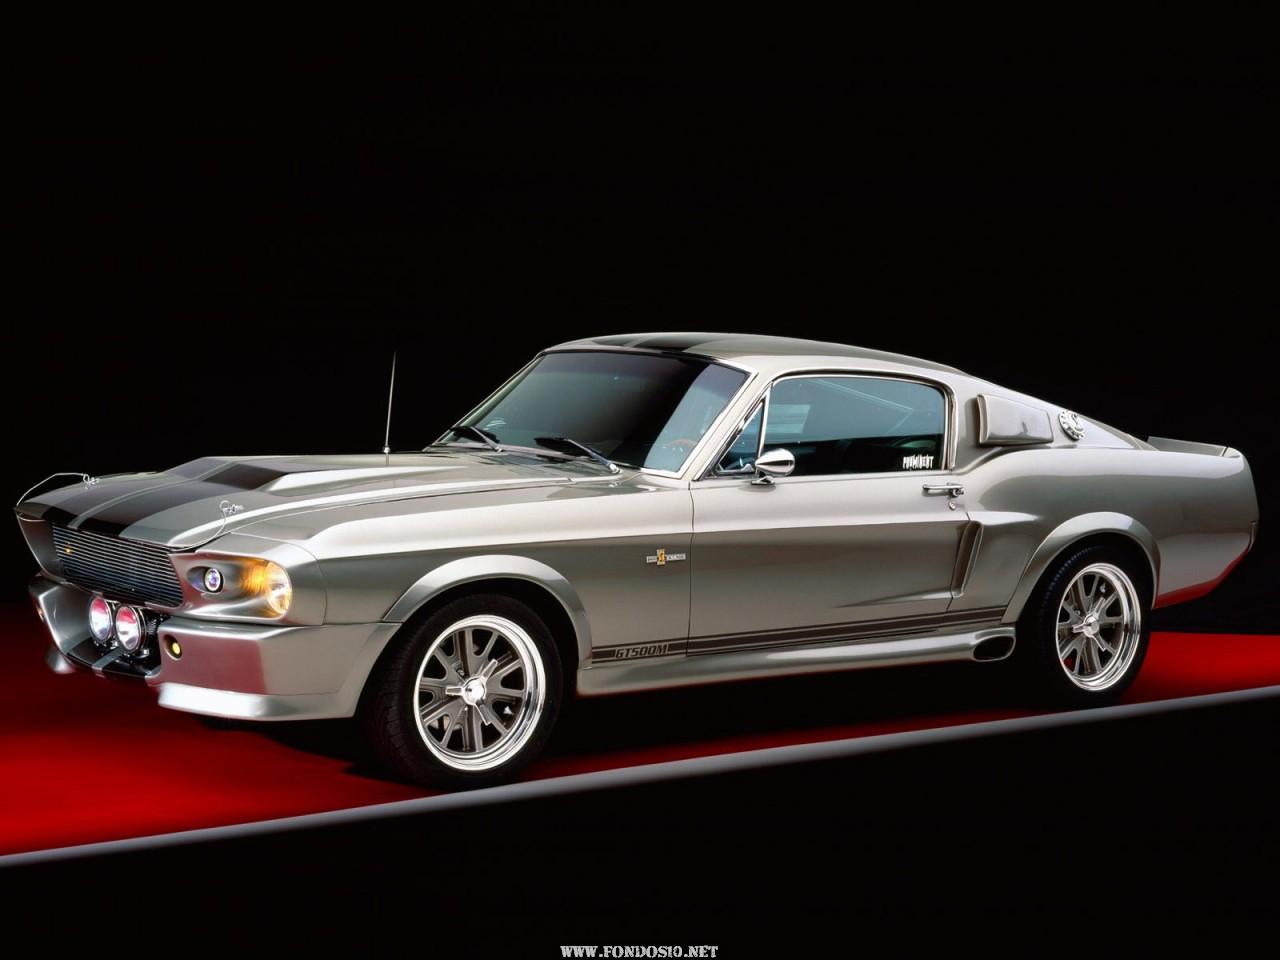 Mustang Gt500 Car Wallpaper Ford